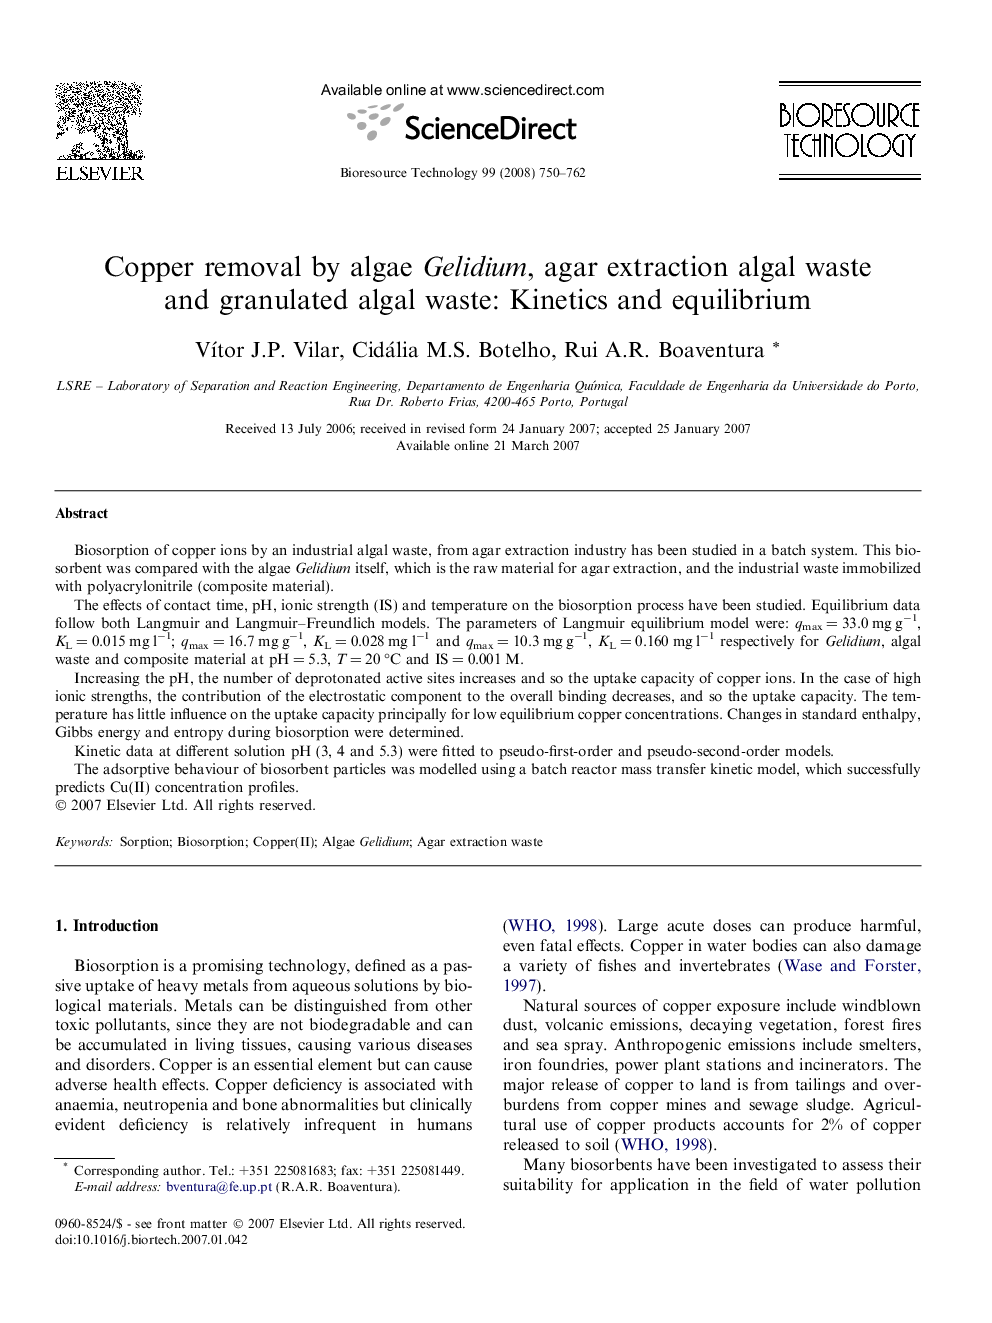 Copper removal by algae Gelidium, agar extraction algal waste and granulated algal waste: Kinetics and equilibrium